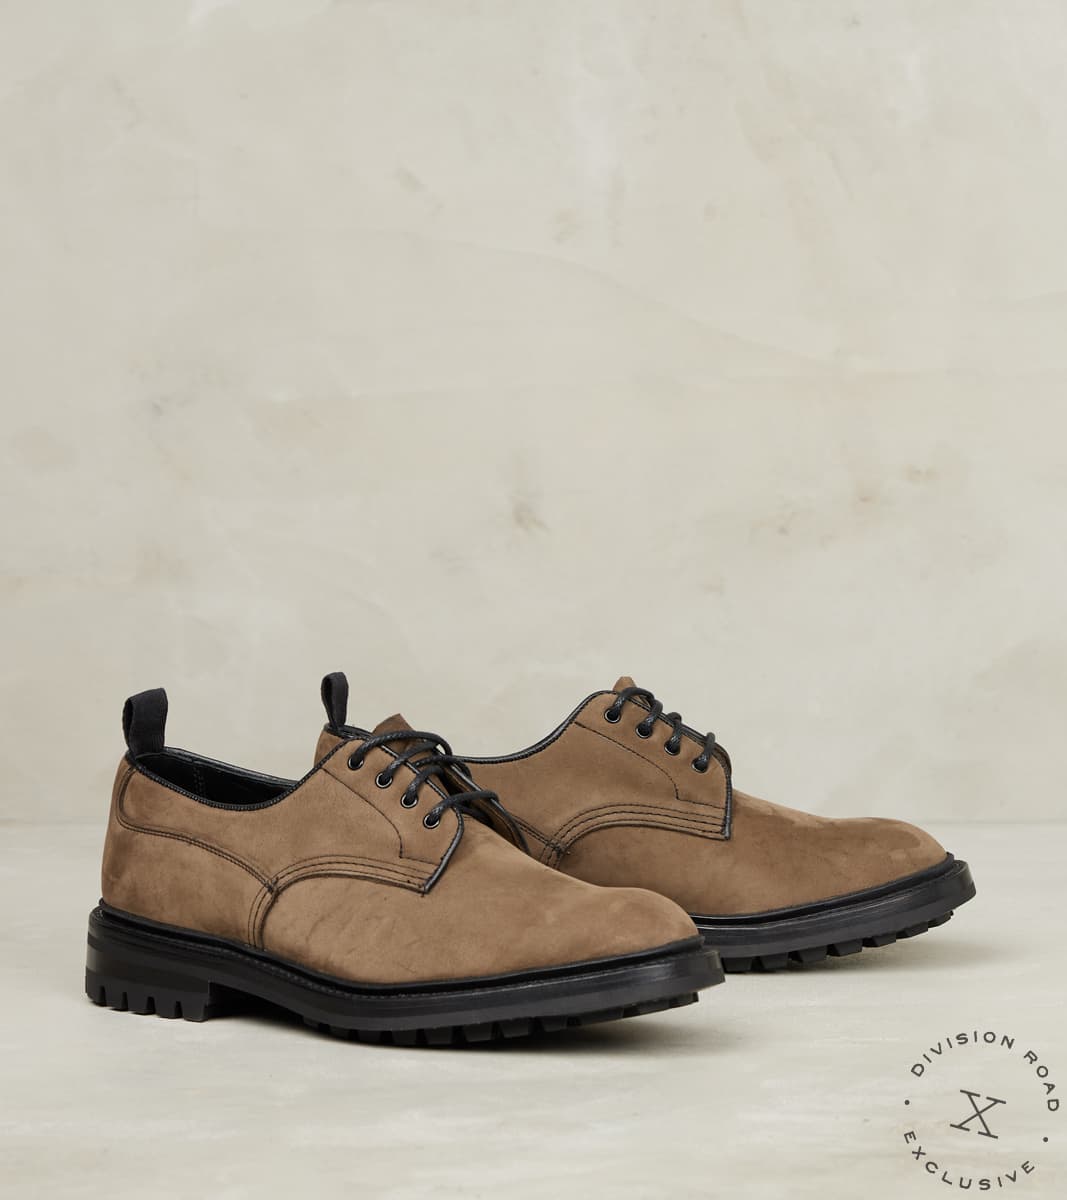 Trickers BOURTON Dainite - Black – A Fine Pair of Shoes